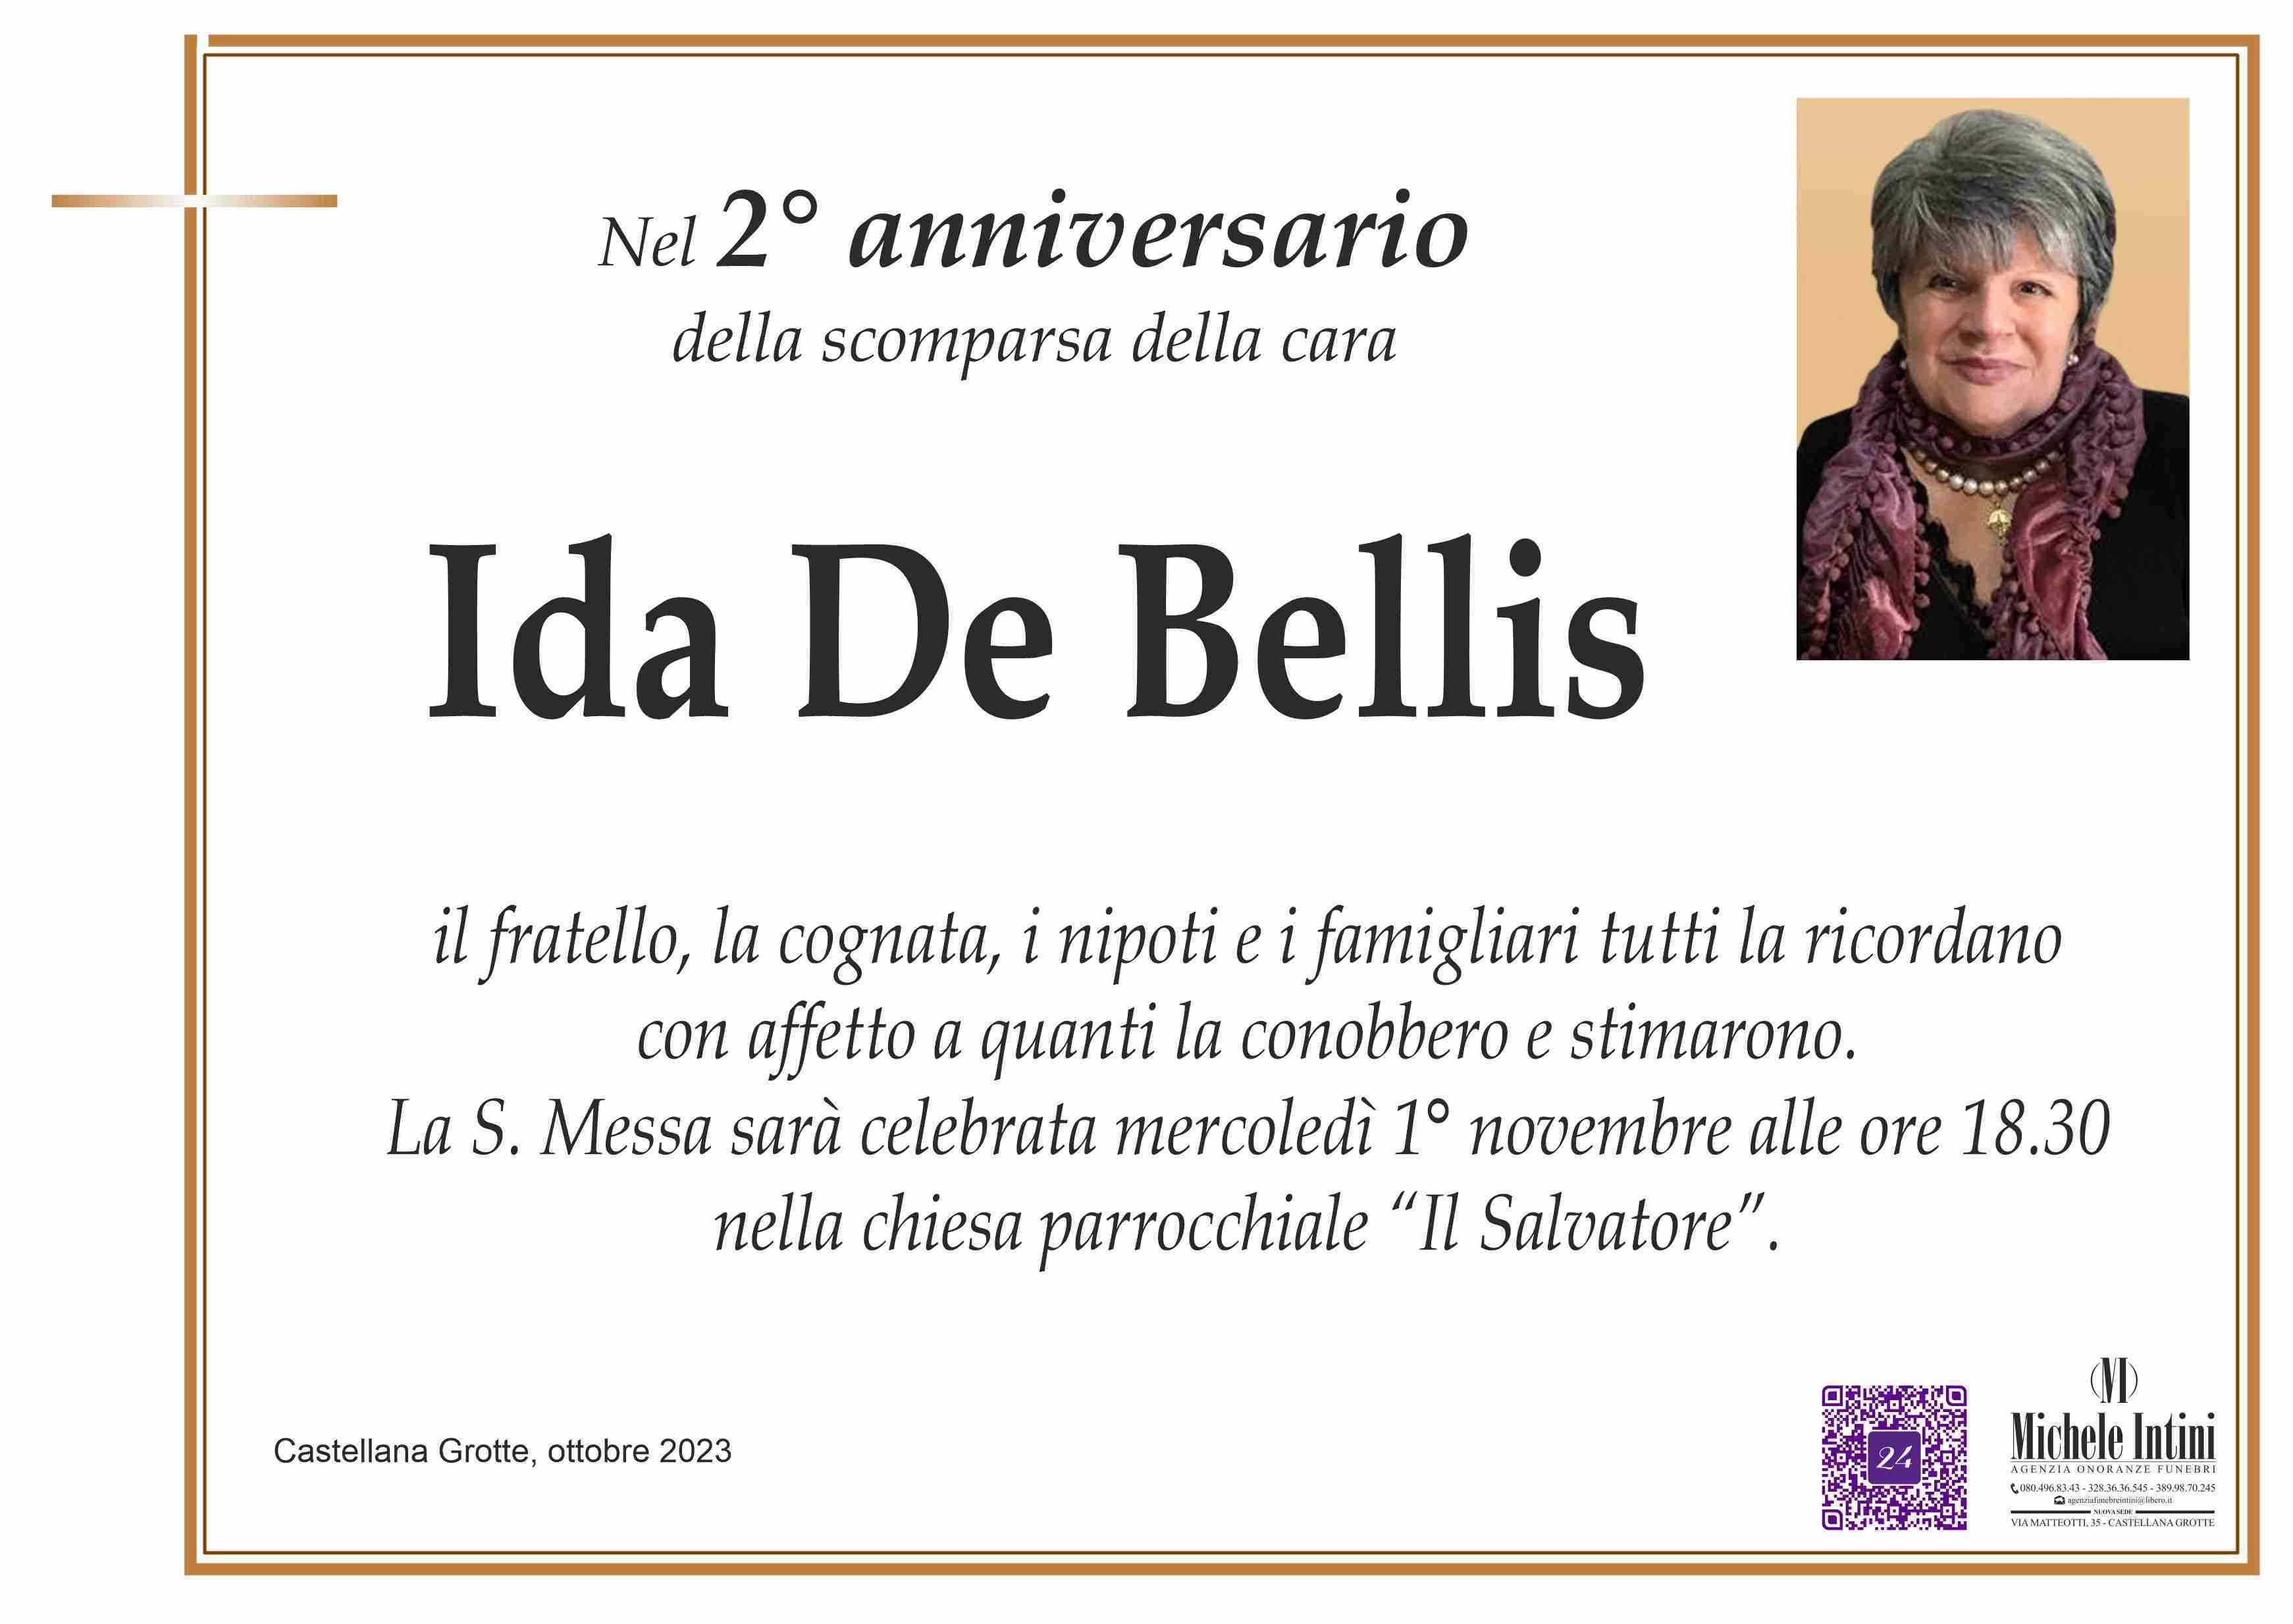 Ida De Bellis